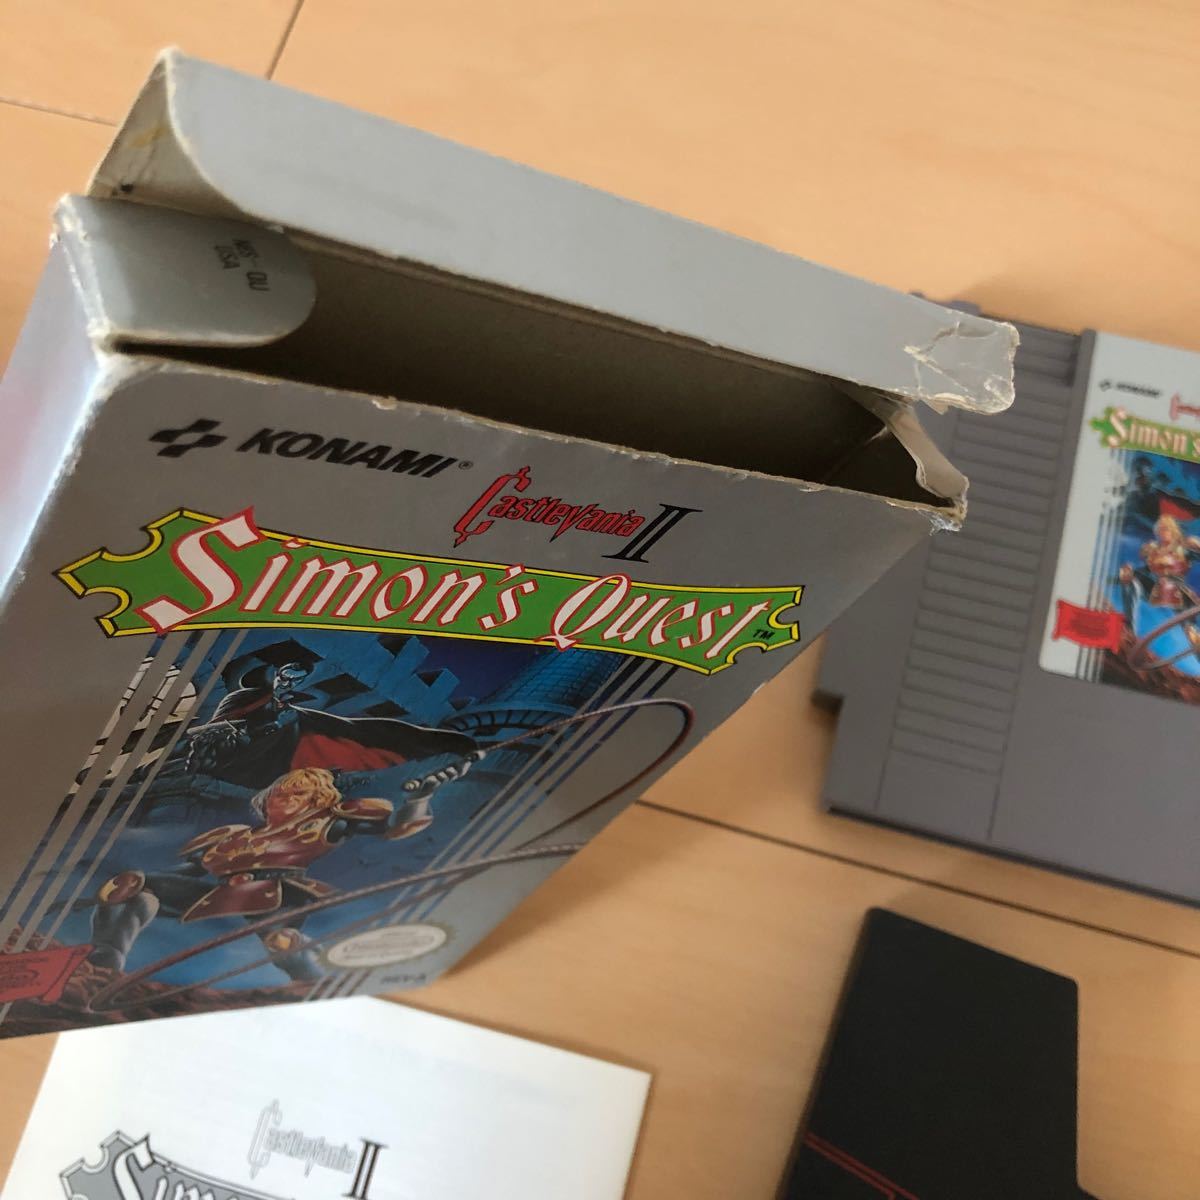 NES版 悪魔城ドラキュラ II 2 箱 説明書付き simon's quest ファミコンソフト 海外版 北米版